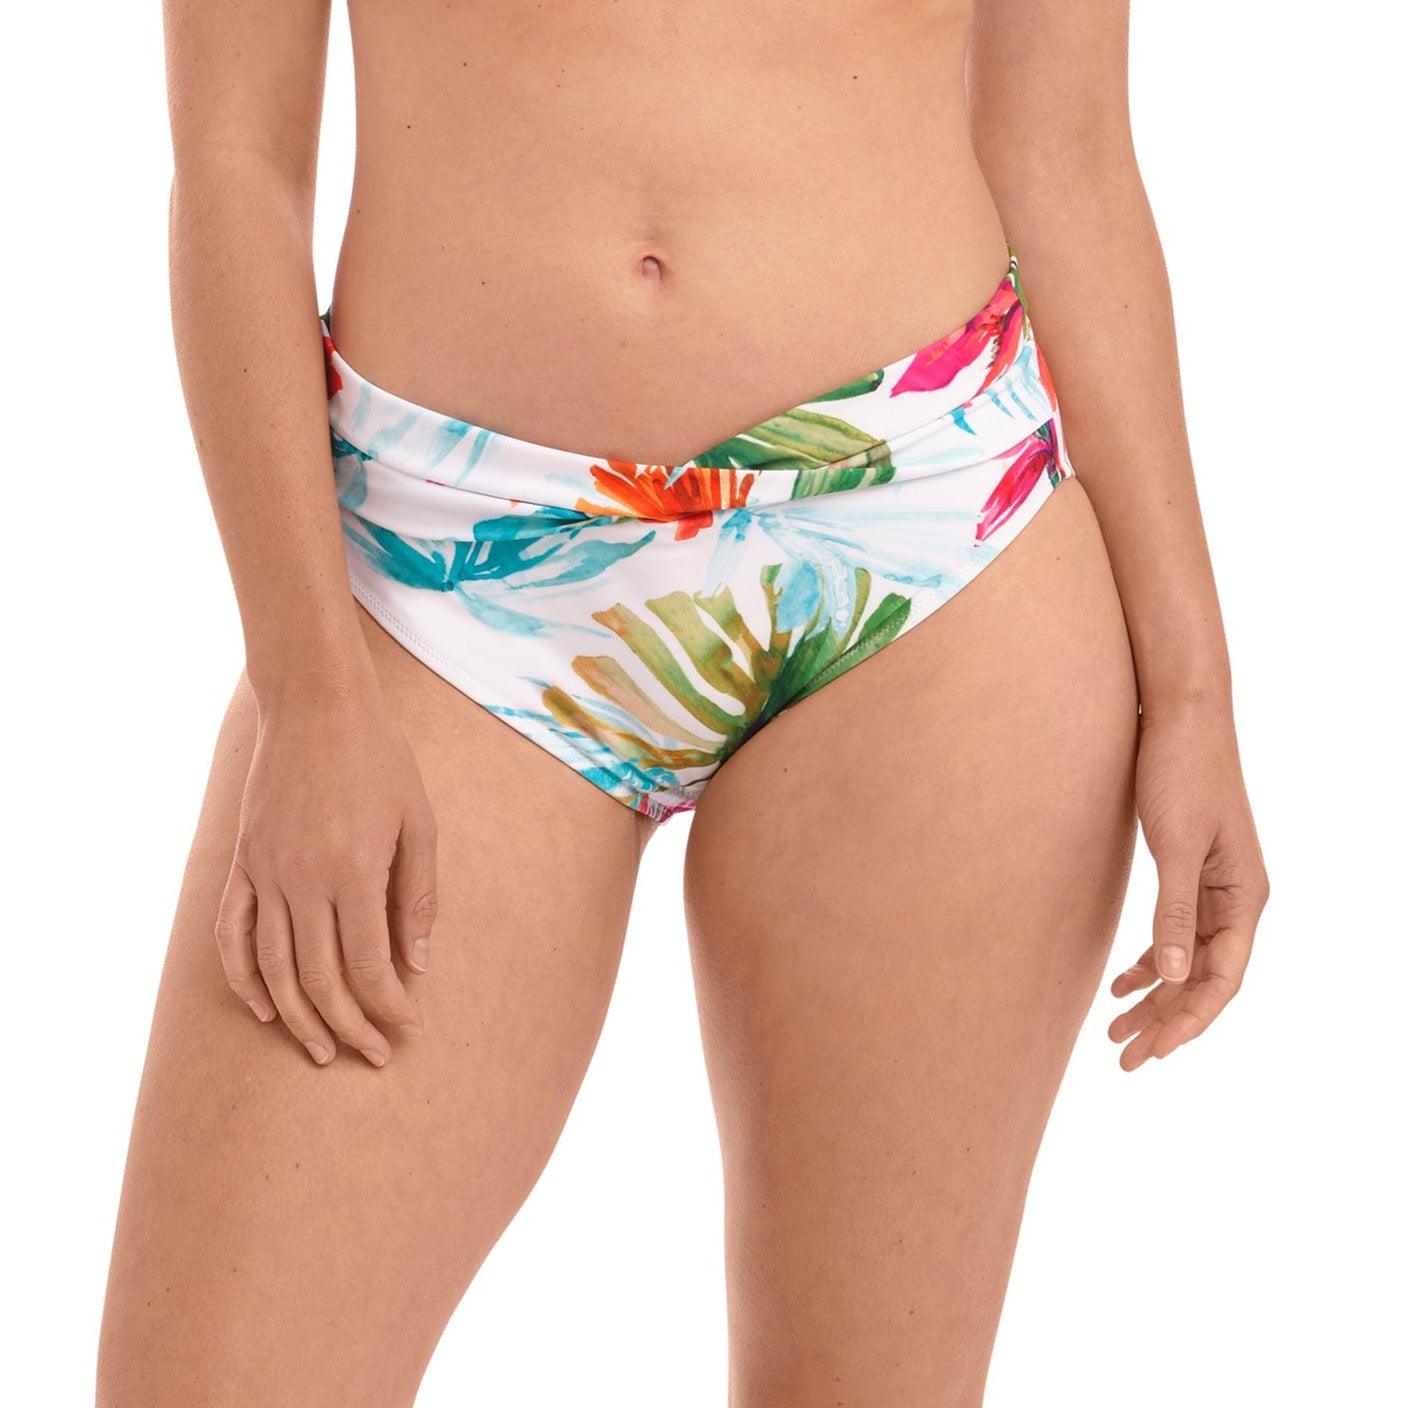 Fantasie "Kiawah Island" Bikini Brief - Lion's Lair Boutique - 2X, ALT, BIK, Bottom, Classic, Fantasie, Fashion, M, Pattern, S, SALE, Swimwear, White, XS - Fantasie